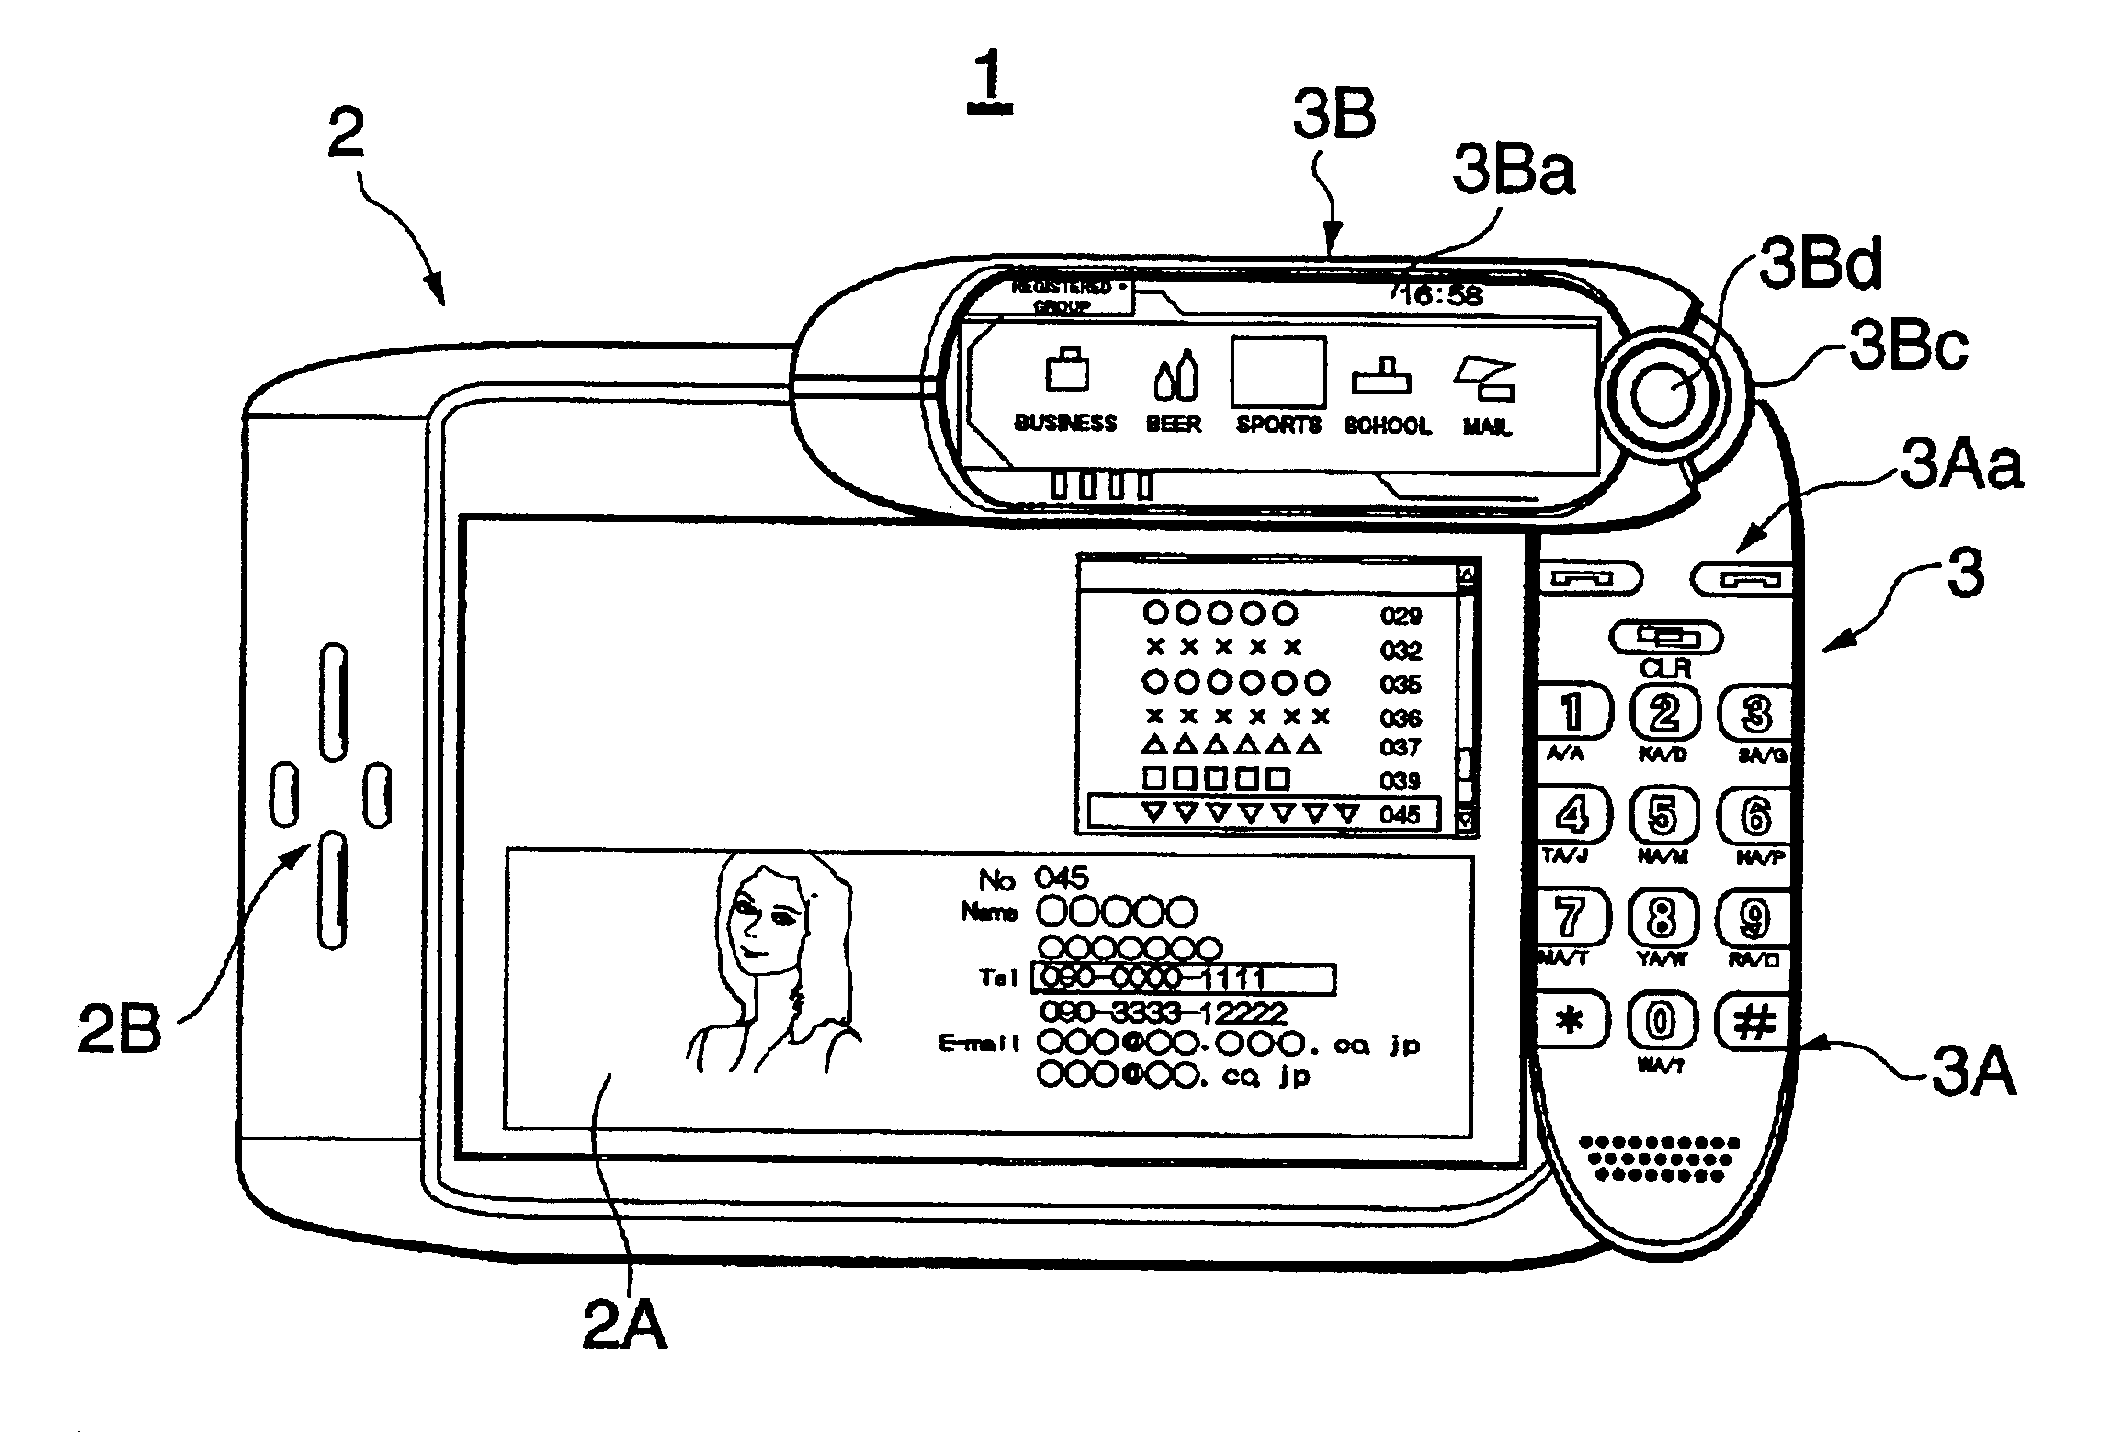 Portable information terminal